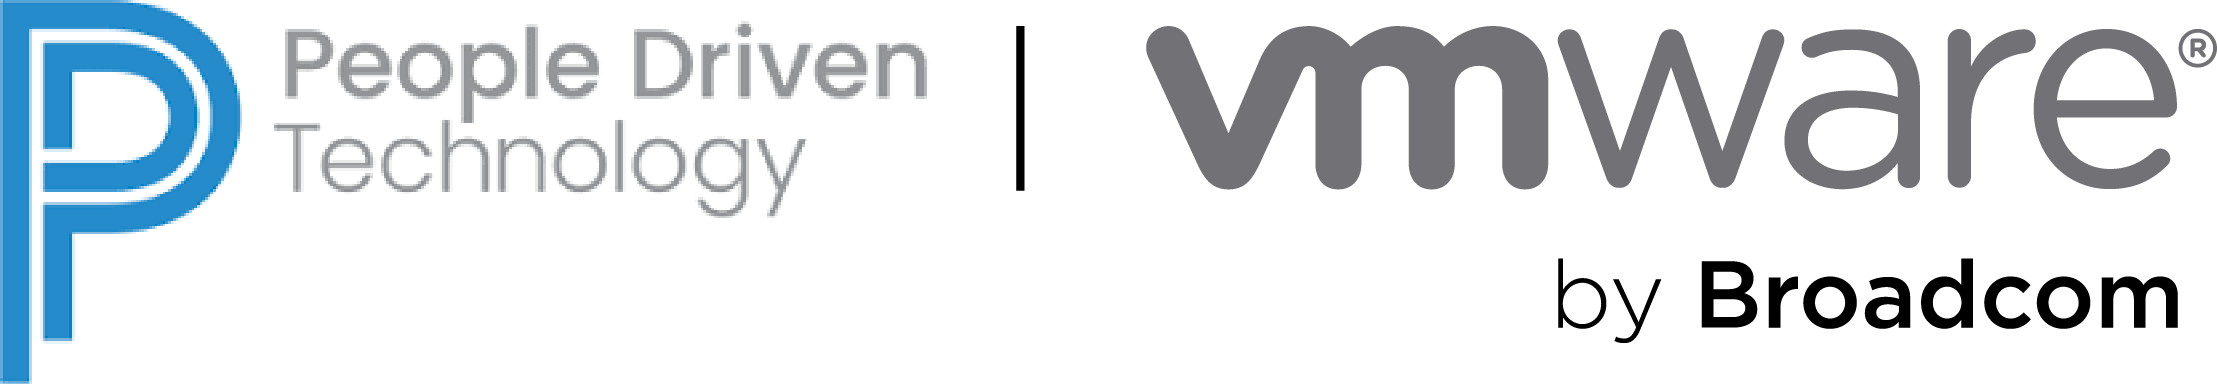 pdt-vmware-logo.png